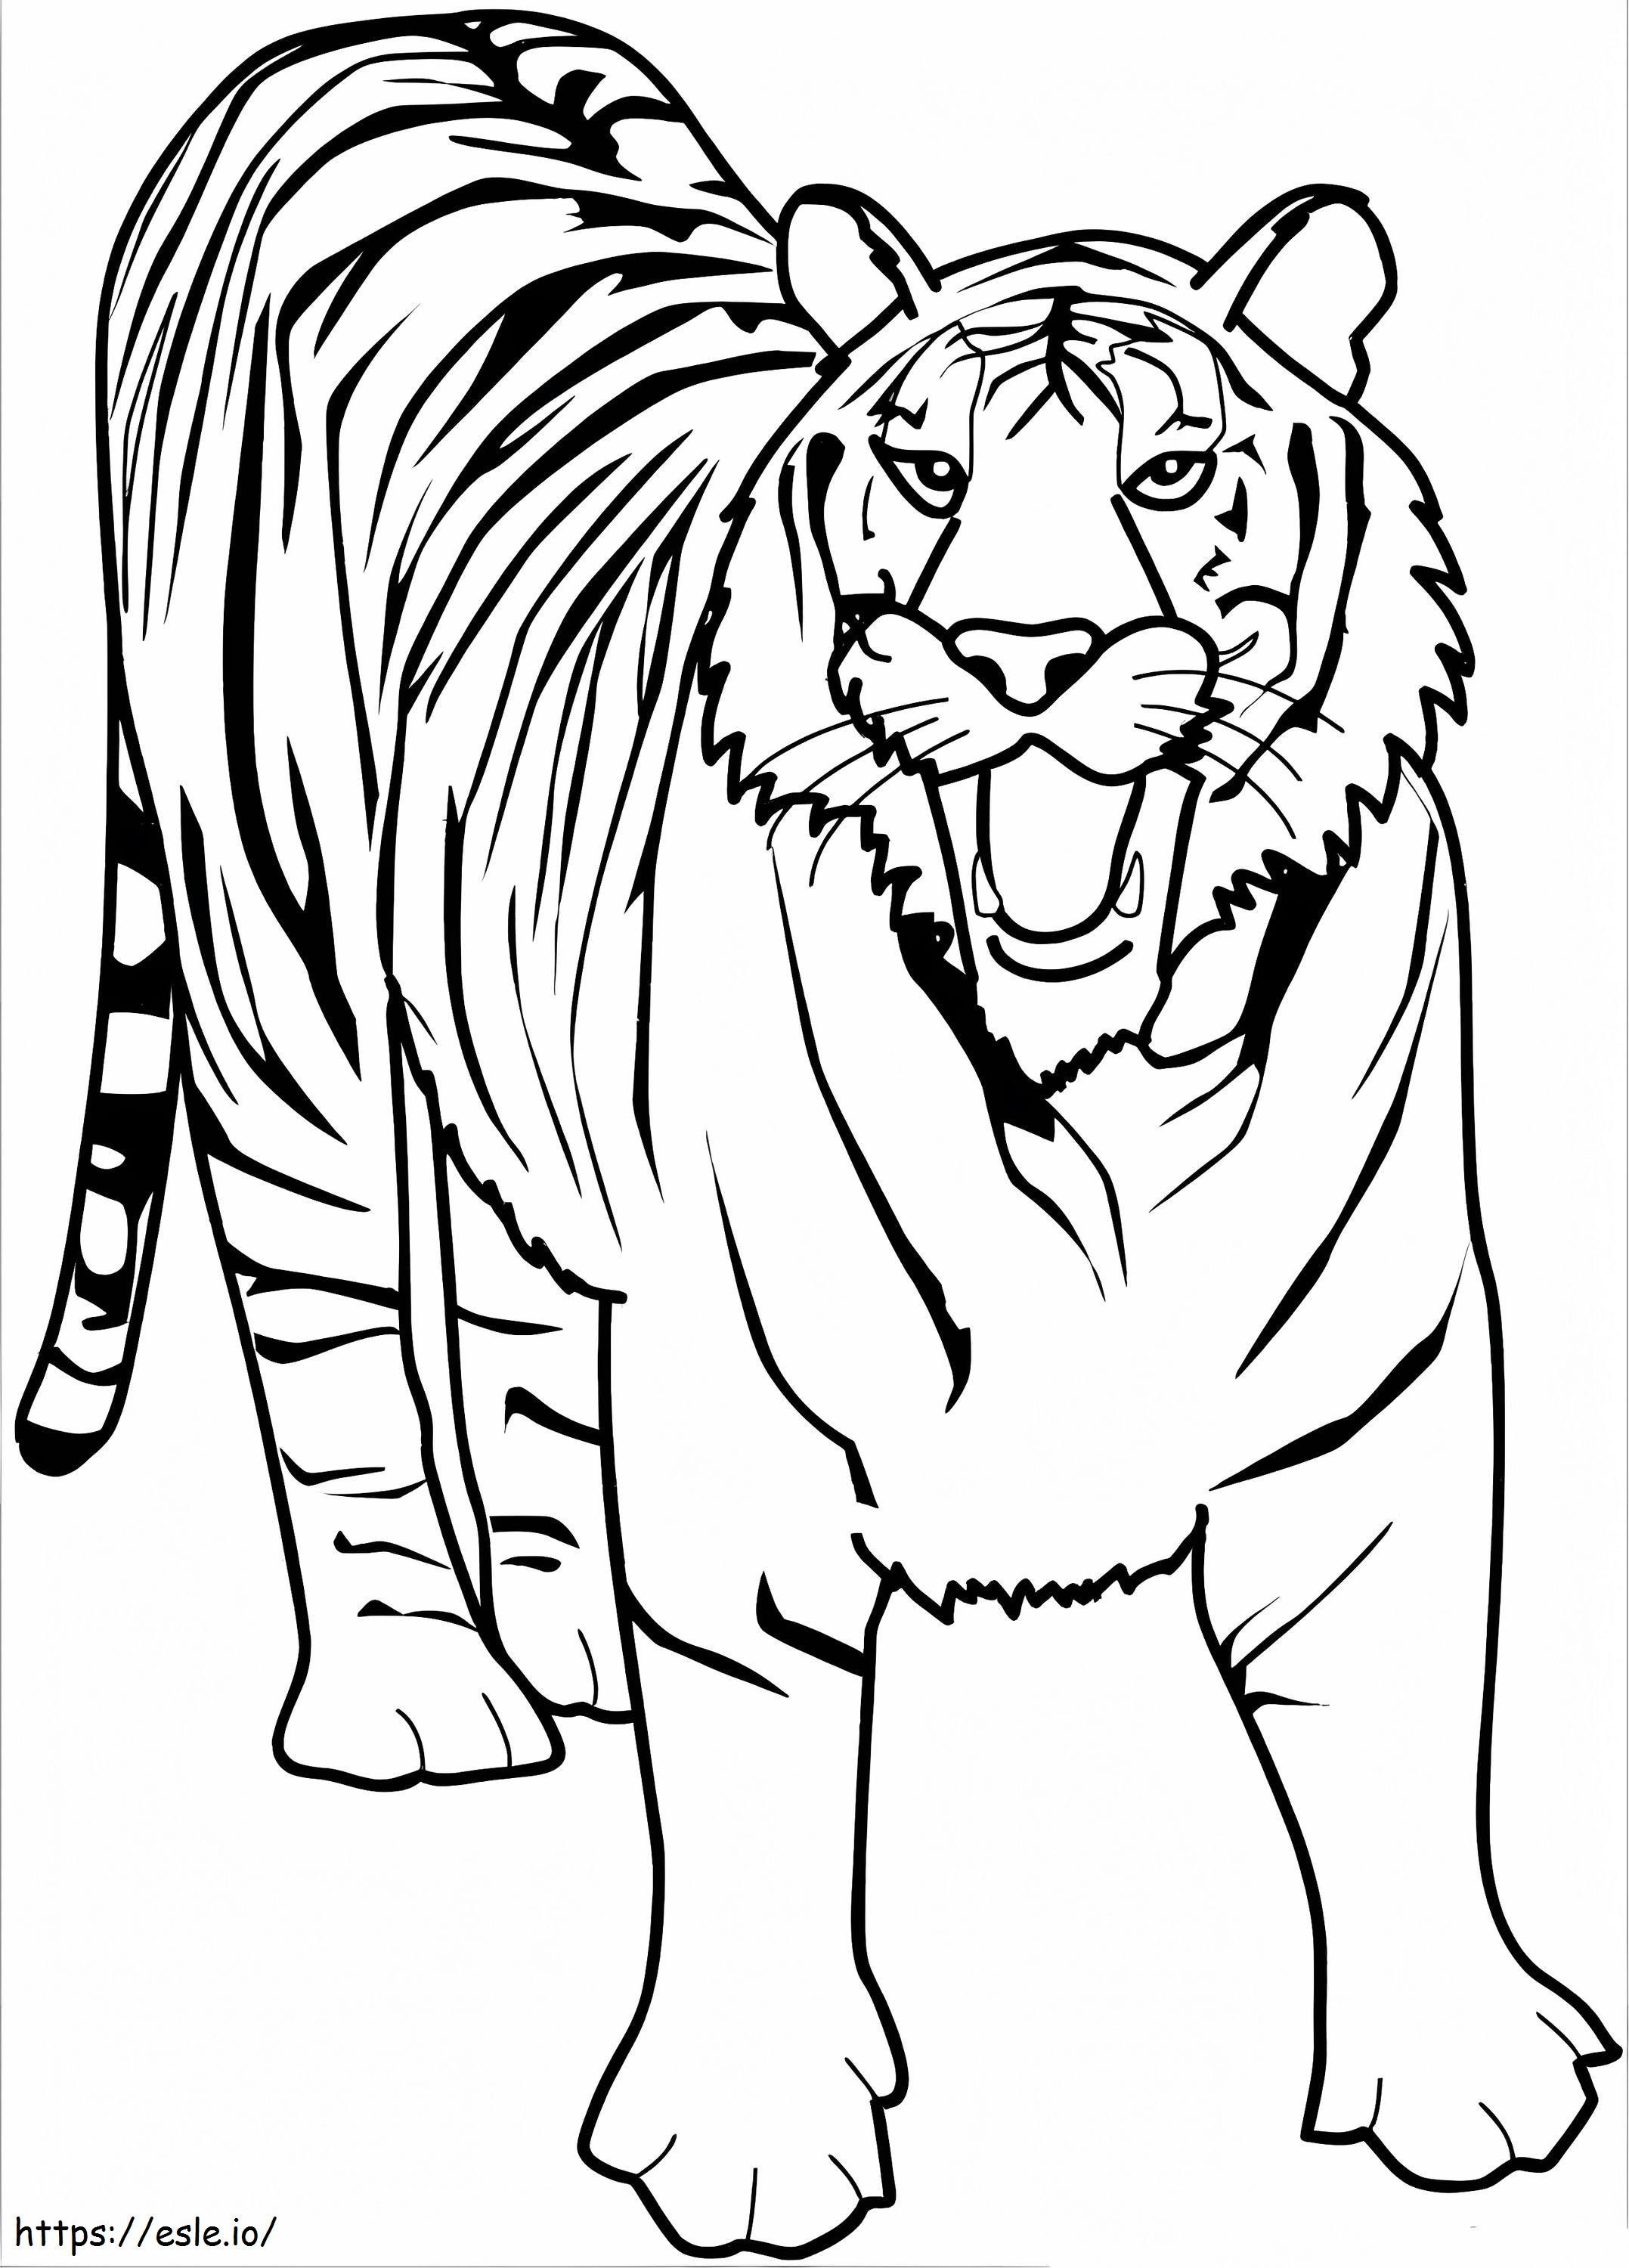 Coloriage Tigre imprimable à imprimer dessin